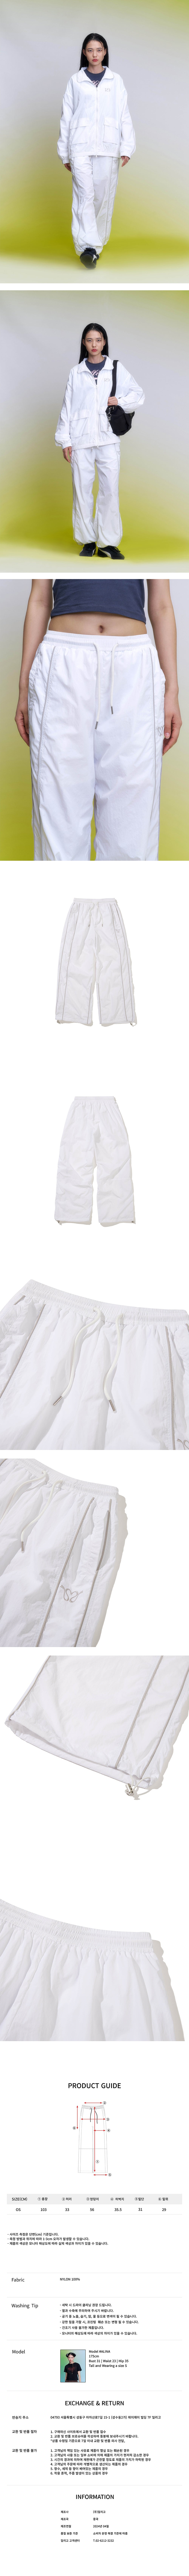 129 Piping Nylon Track Pants White